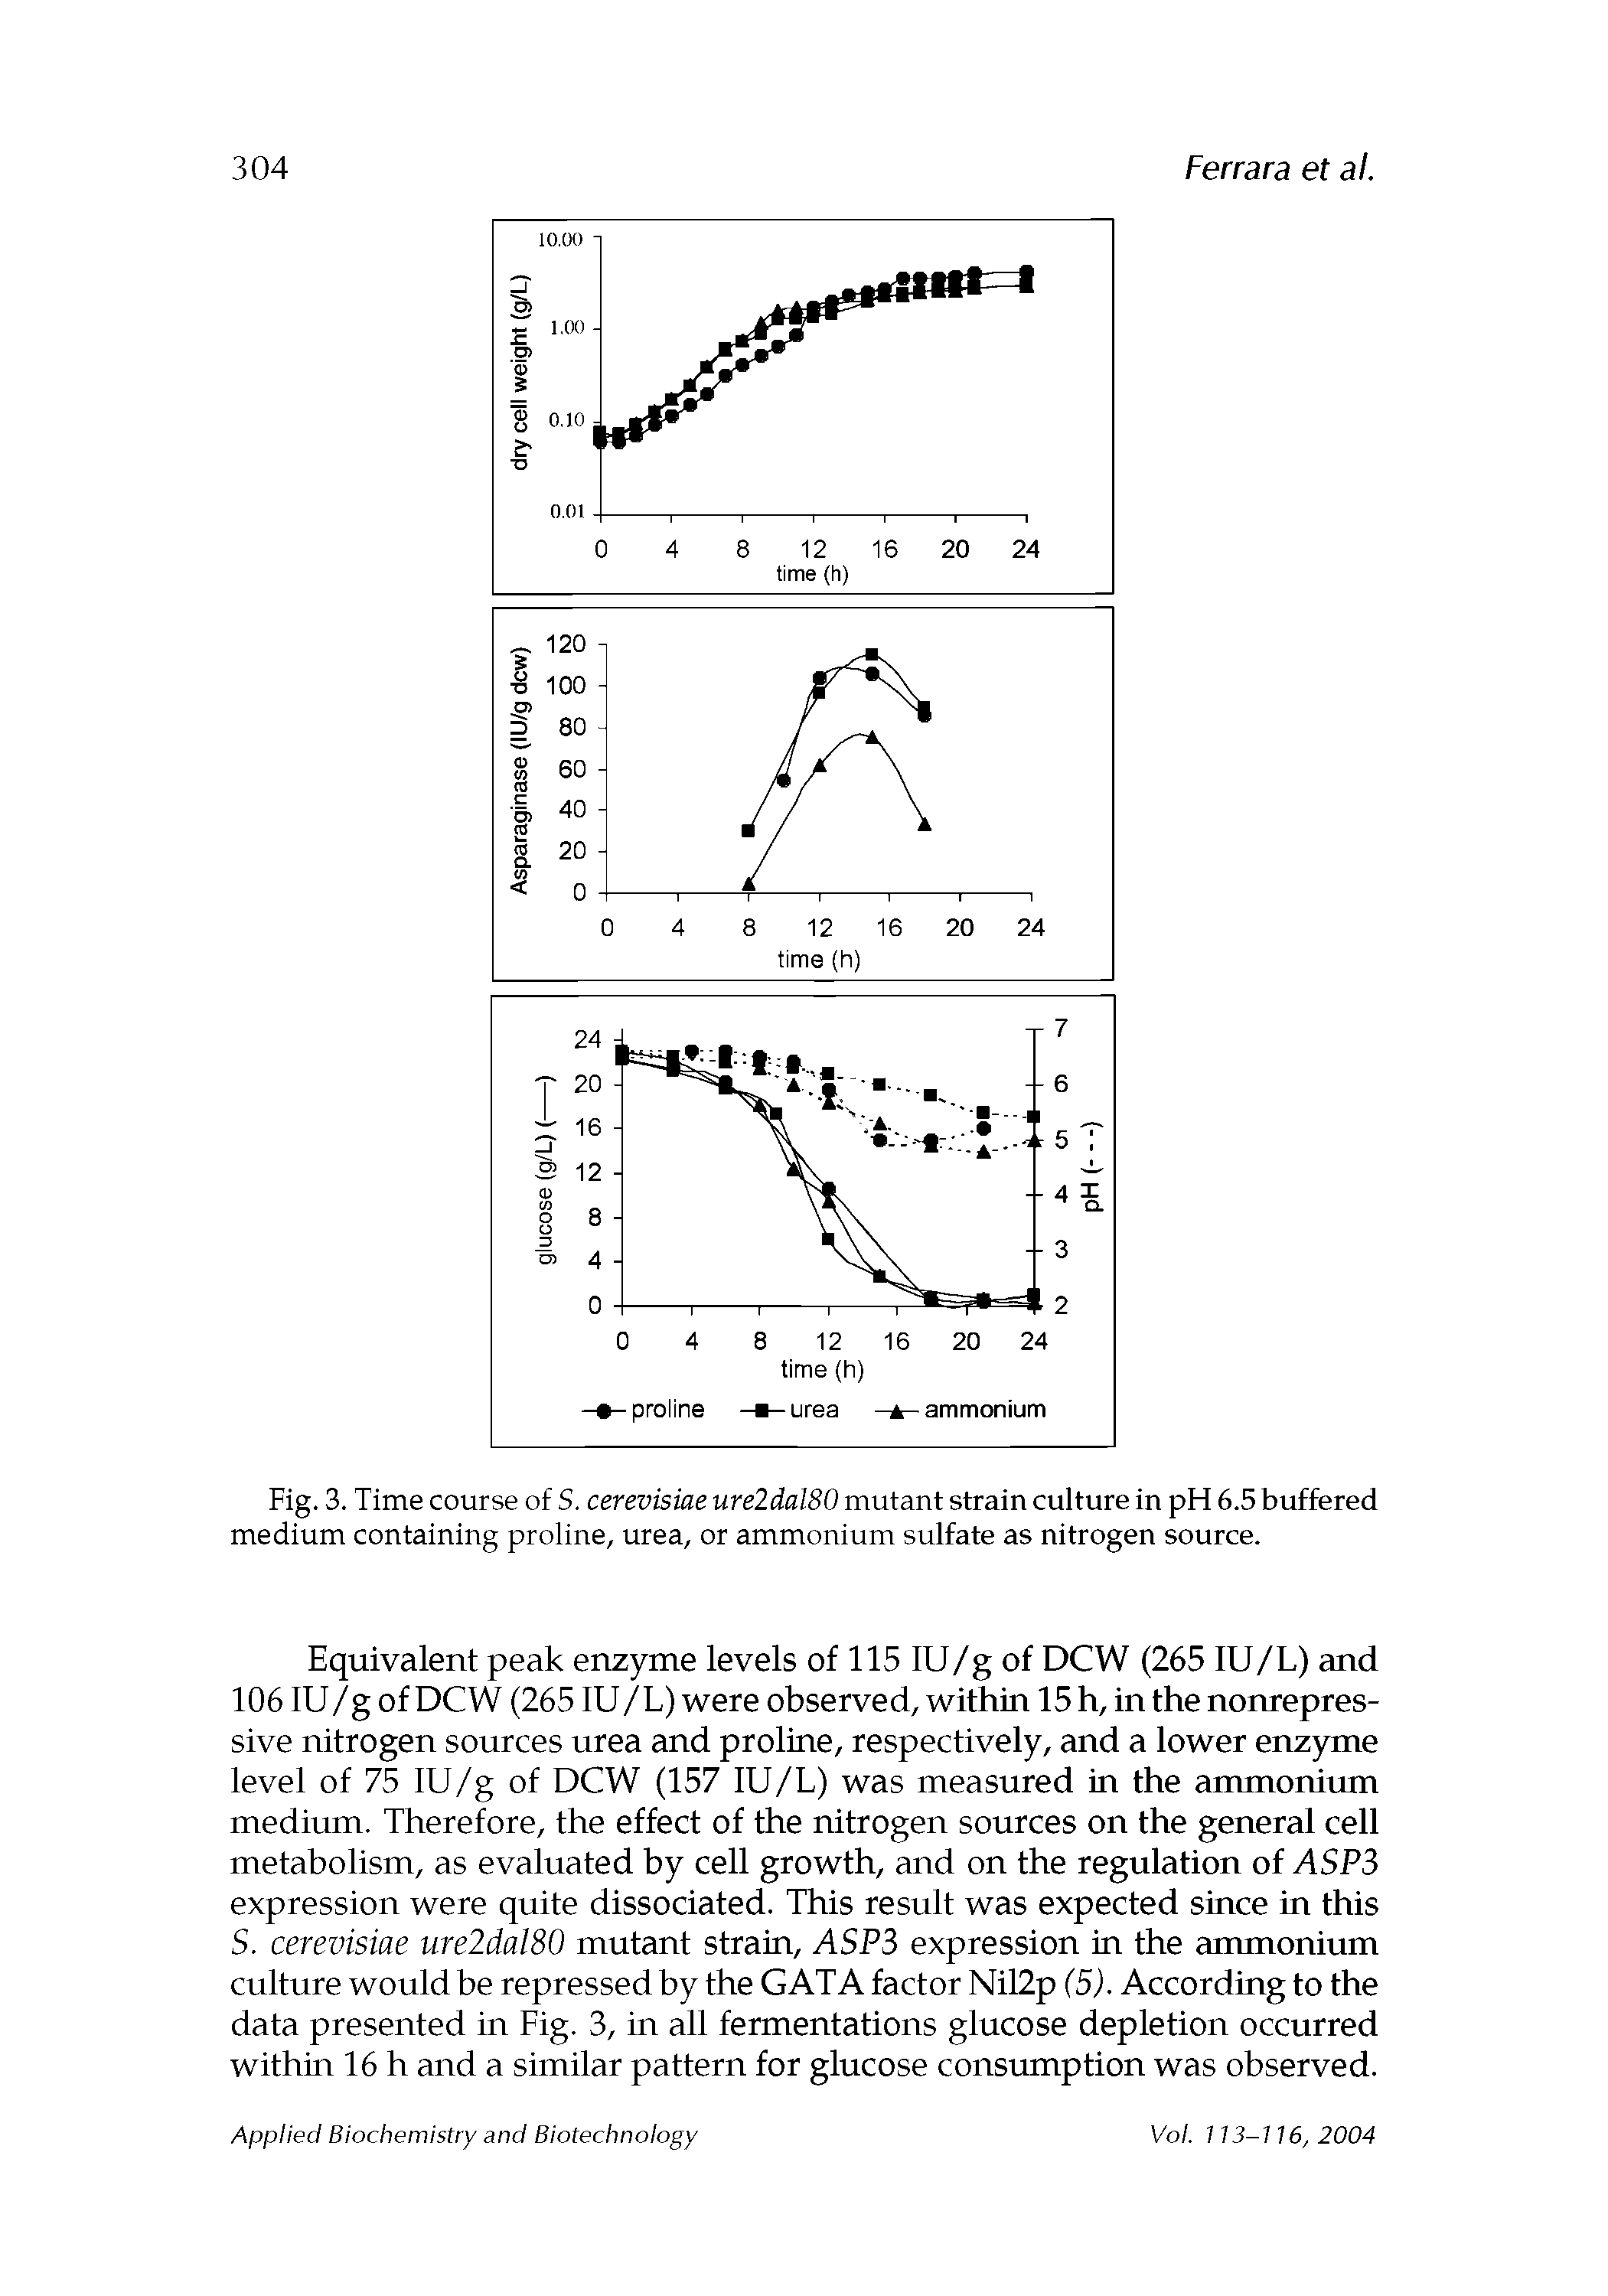 Fig. 3. Time course of S. cerevisiae ure2dal80 mutant strain culture in pH 6.5 buffered medium containing proline, urea, or ammonium sulfate as nitrogen source.